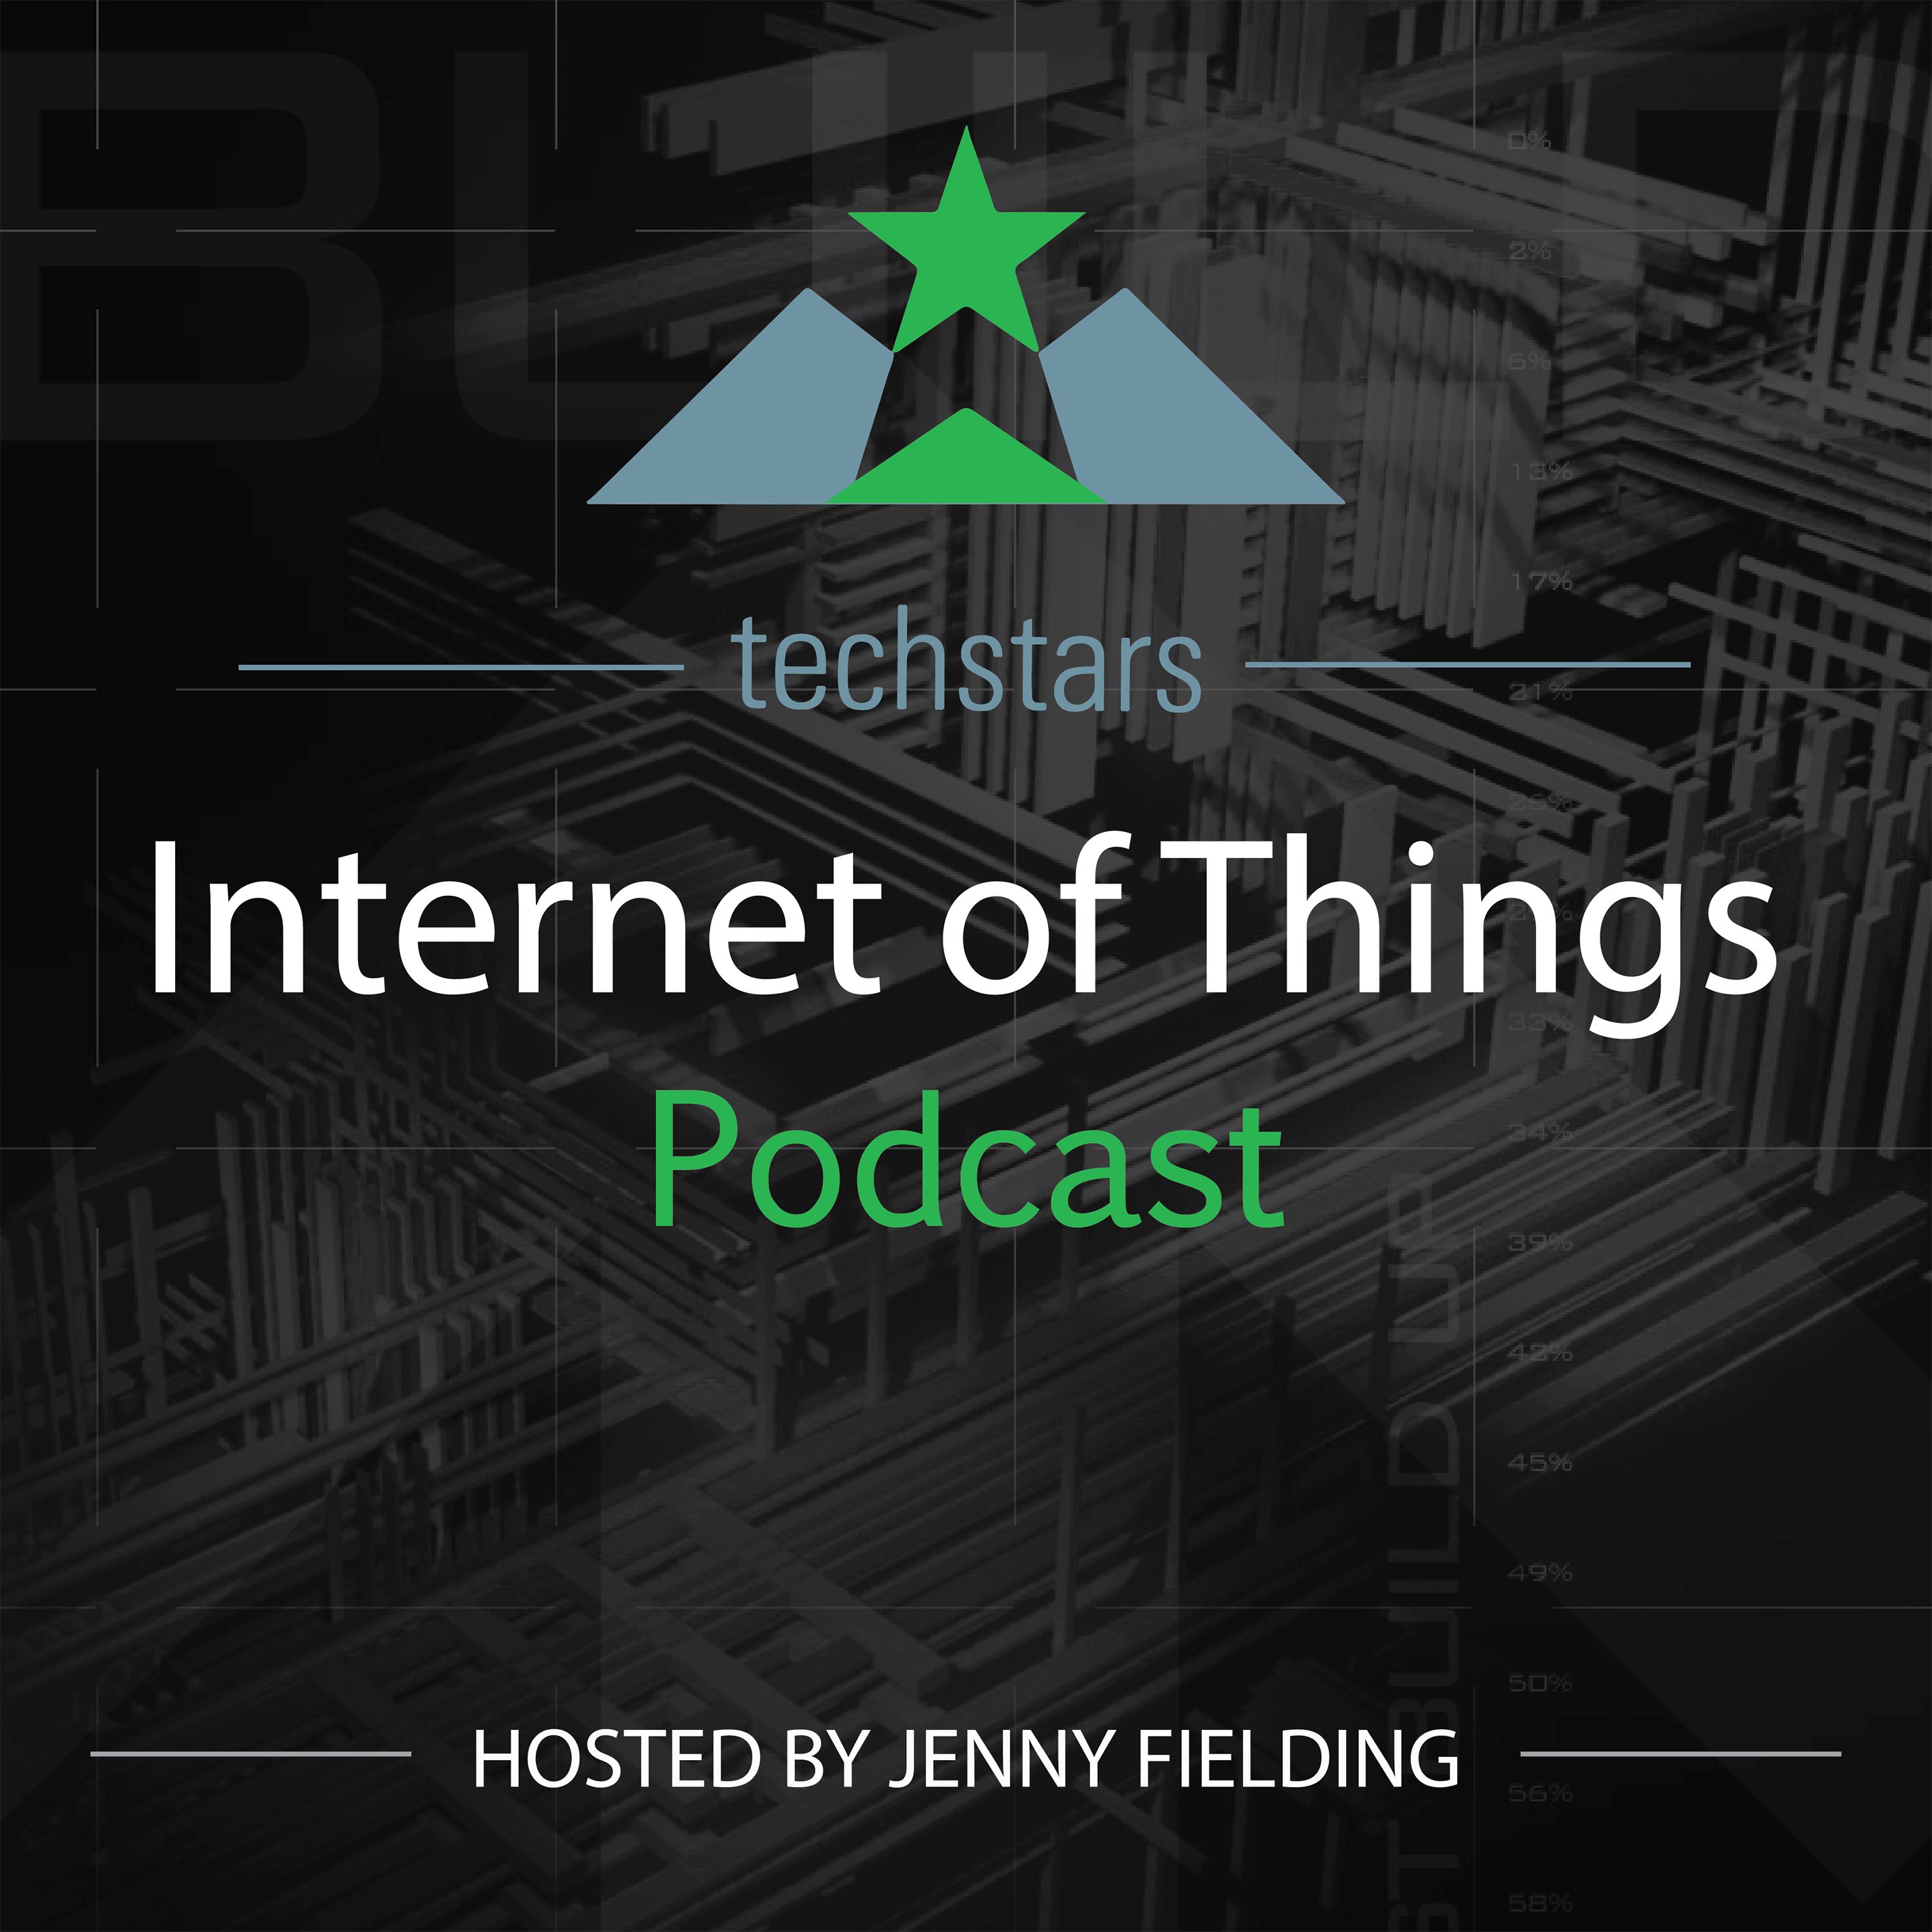 Techstars Internet of Things Podcast